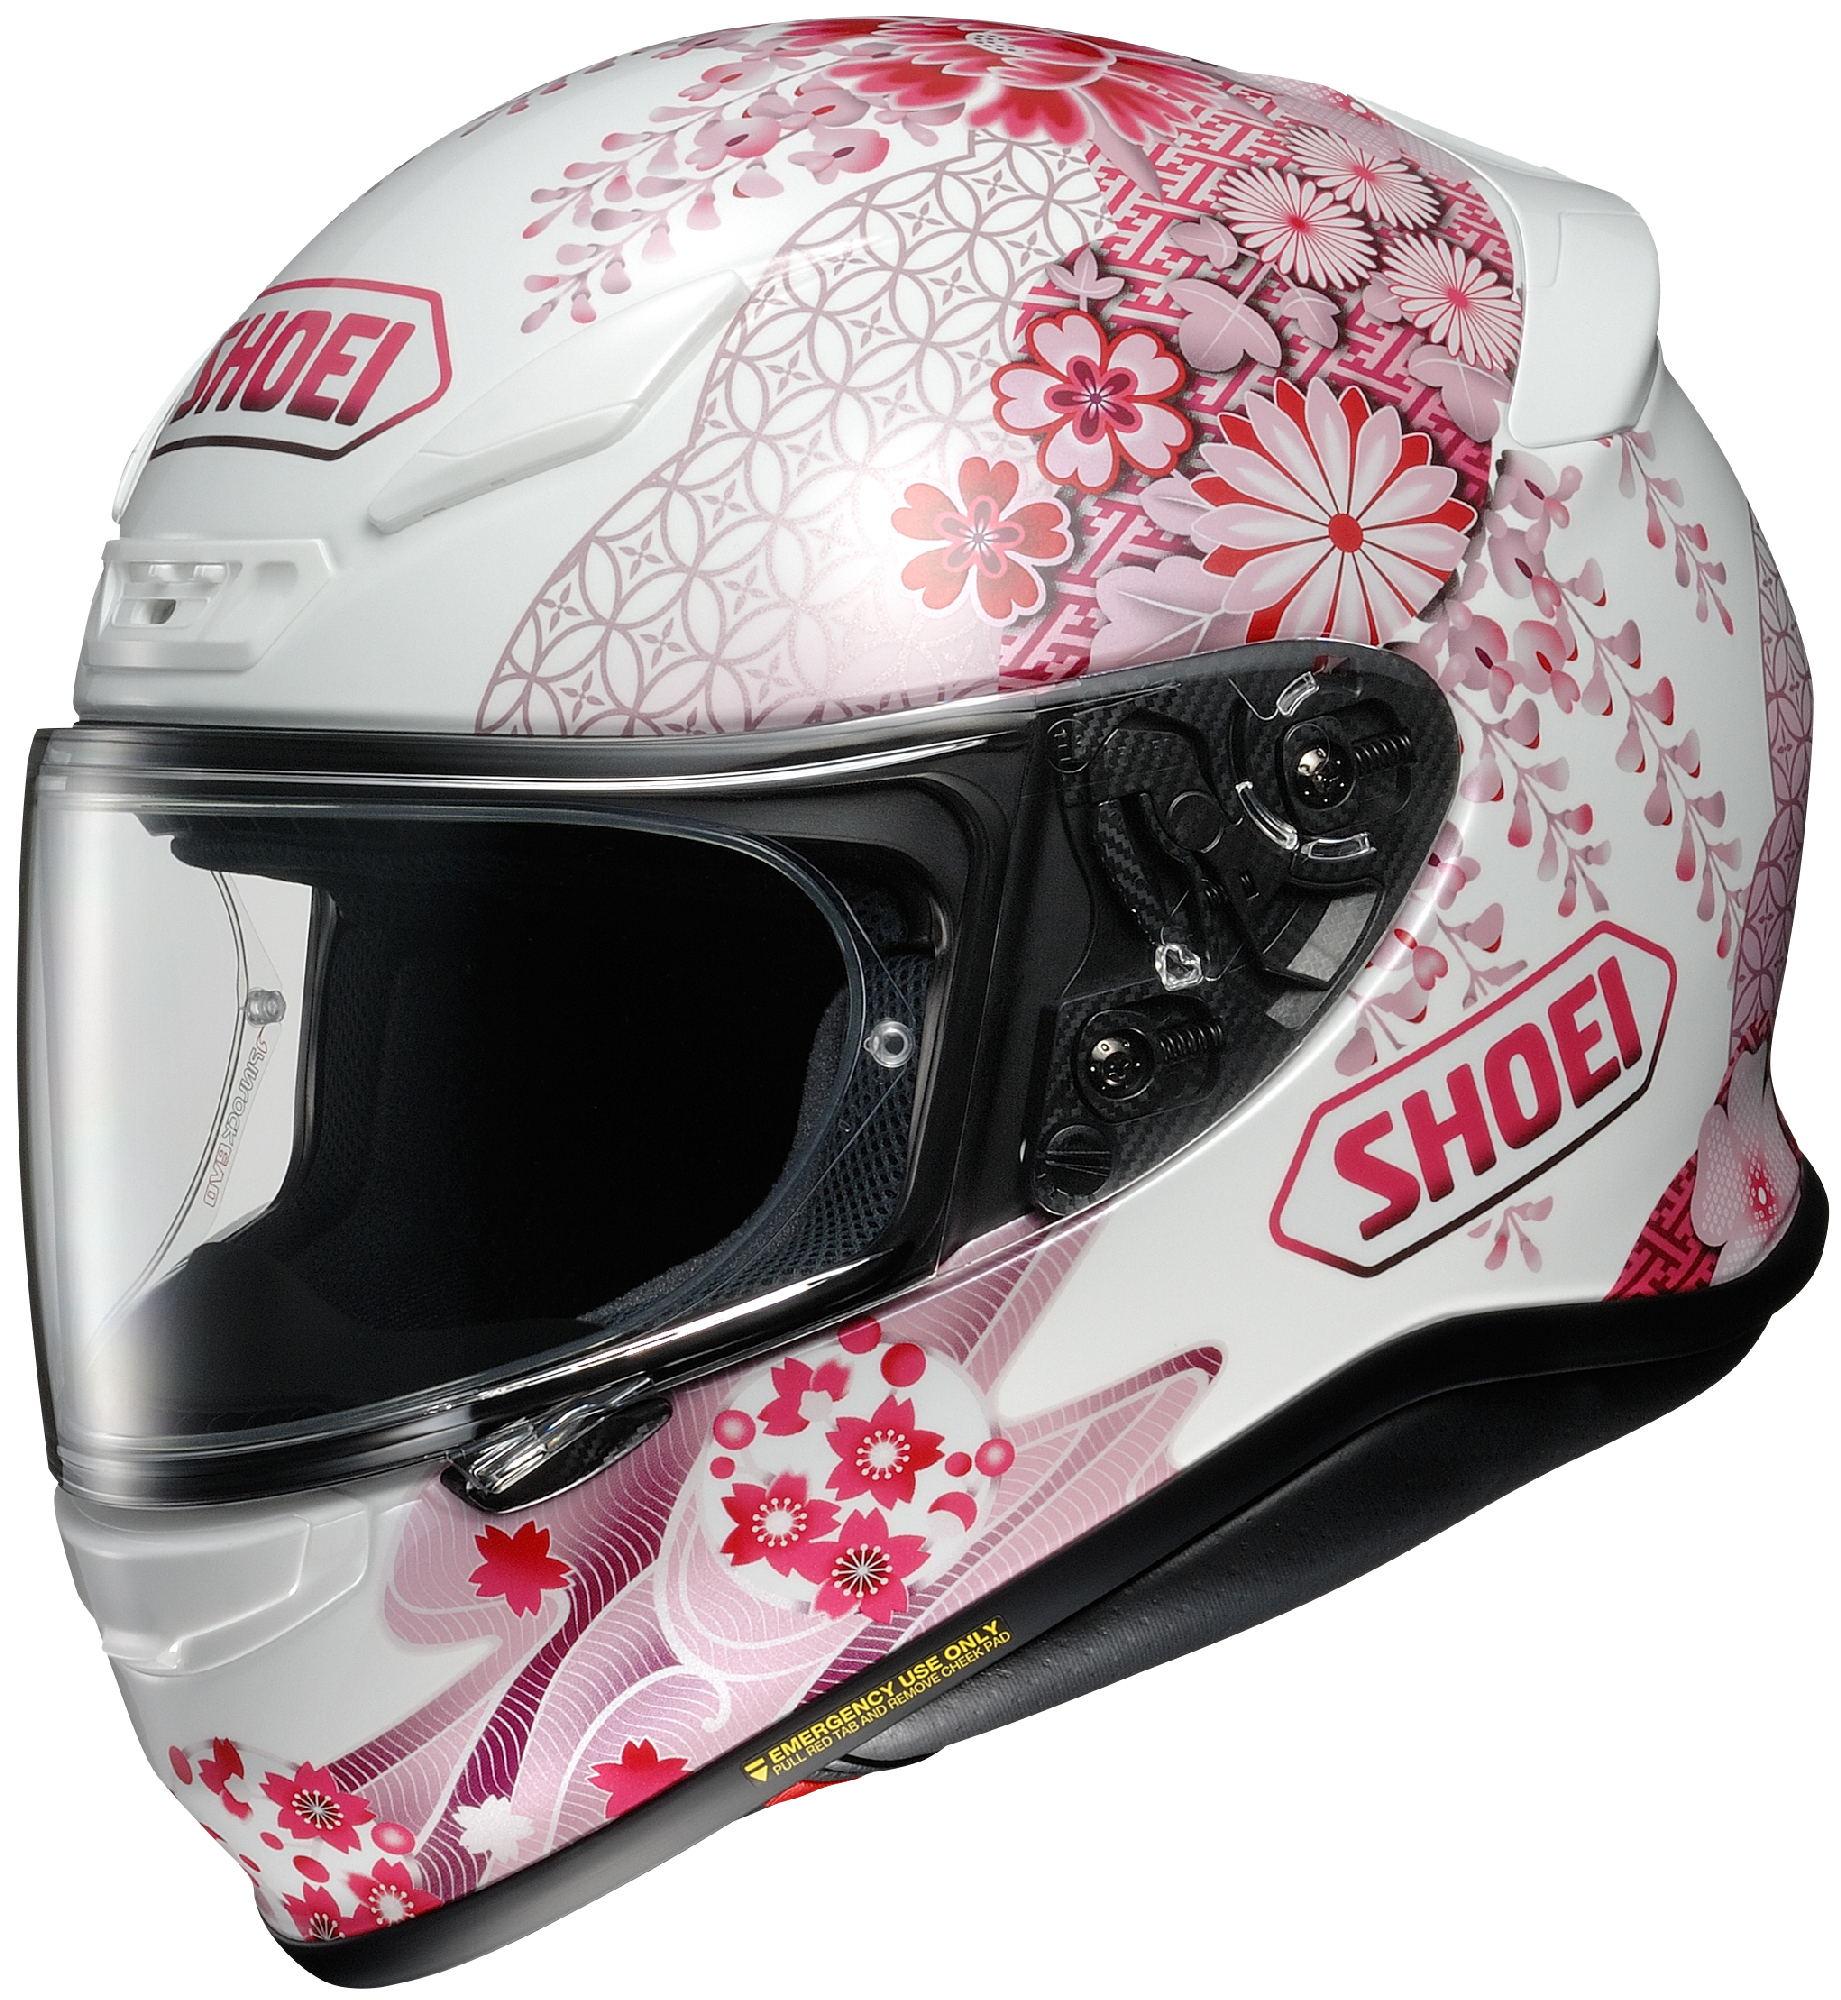 Shoei Adult Pink/White RF-1200 Harmonic TC-7 Motorcycle Helmet | eBay